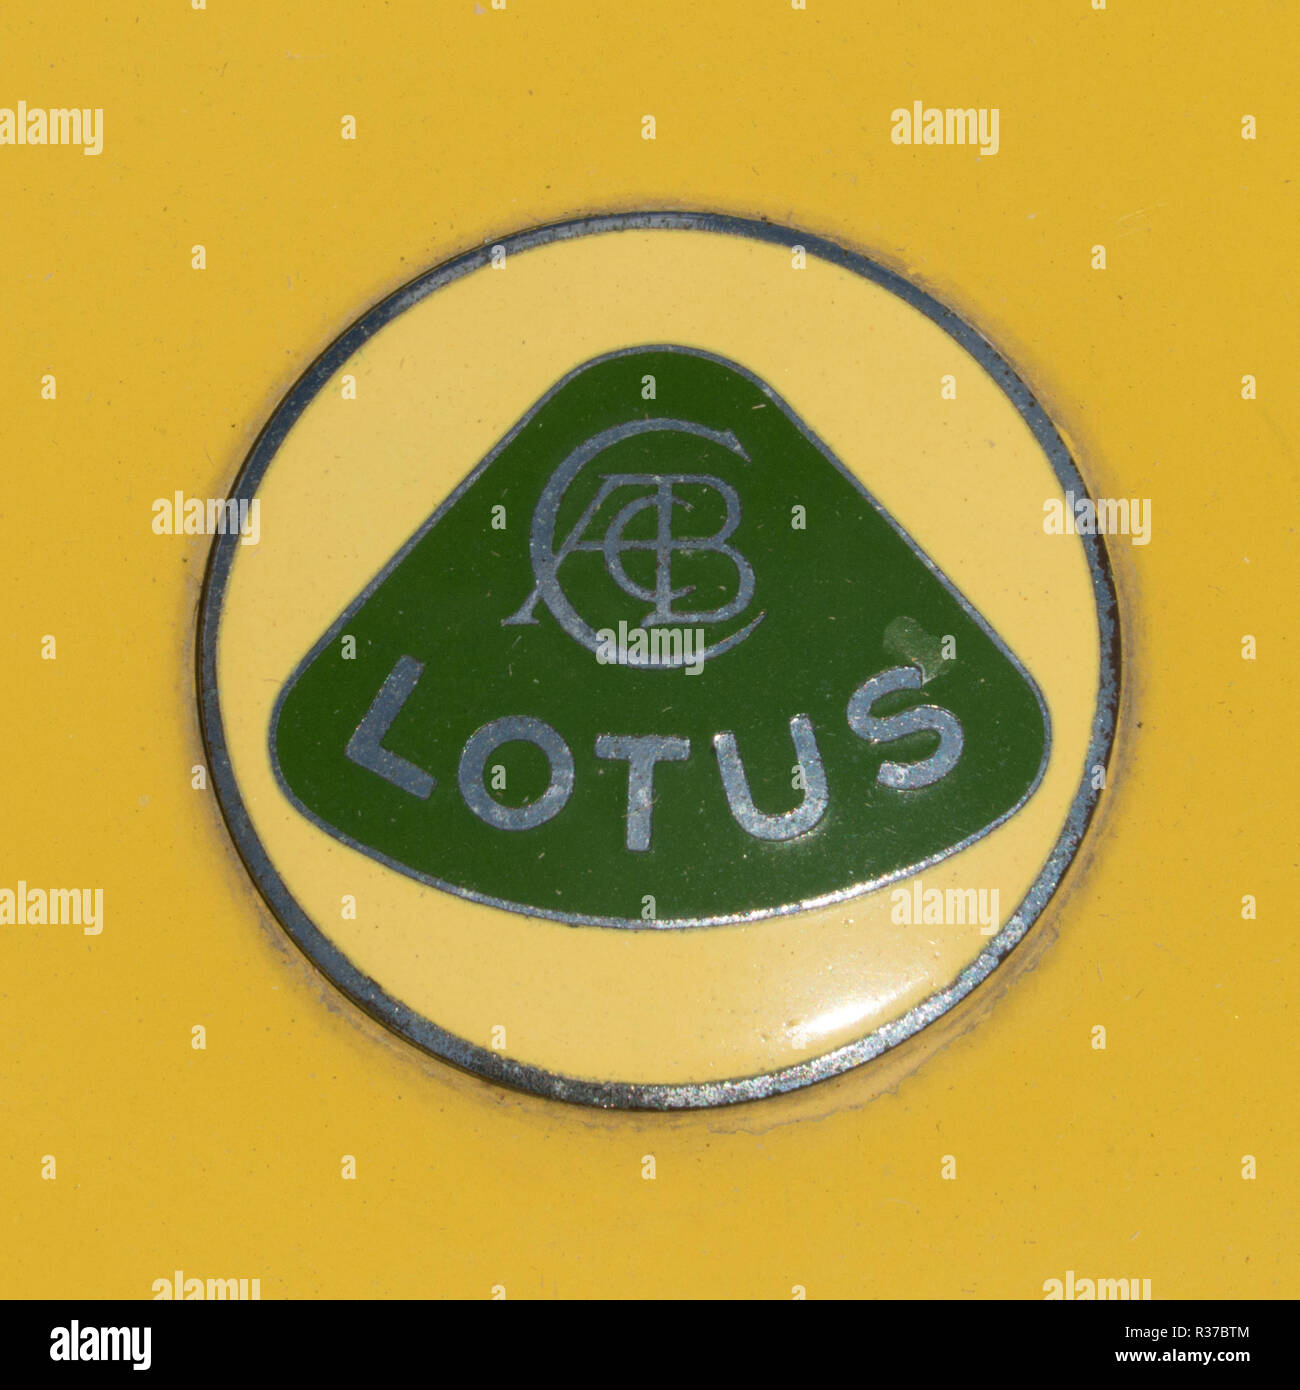 Lotus Car Marque Stock Photo